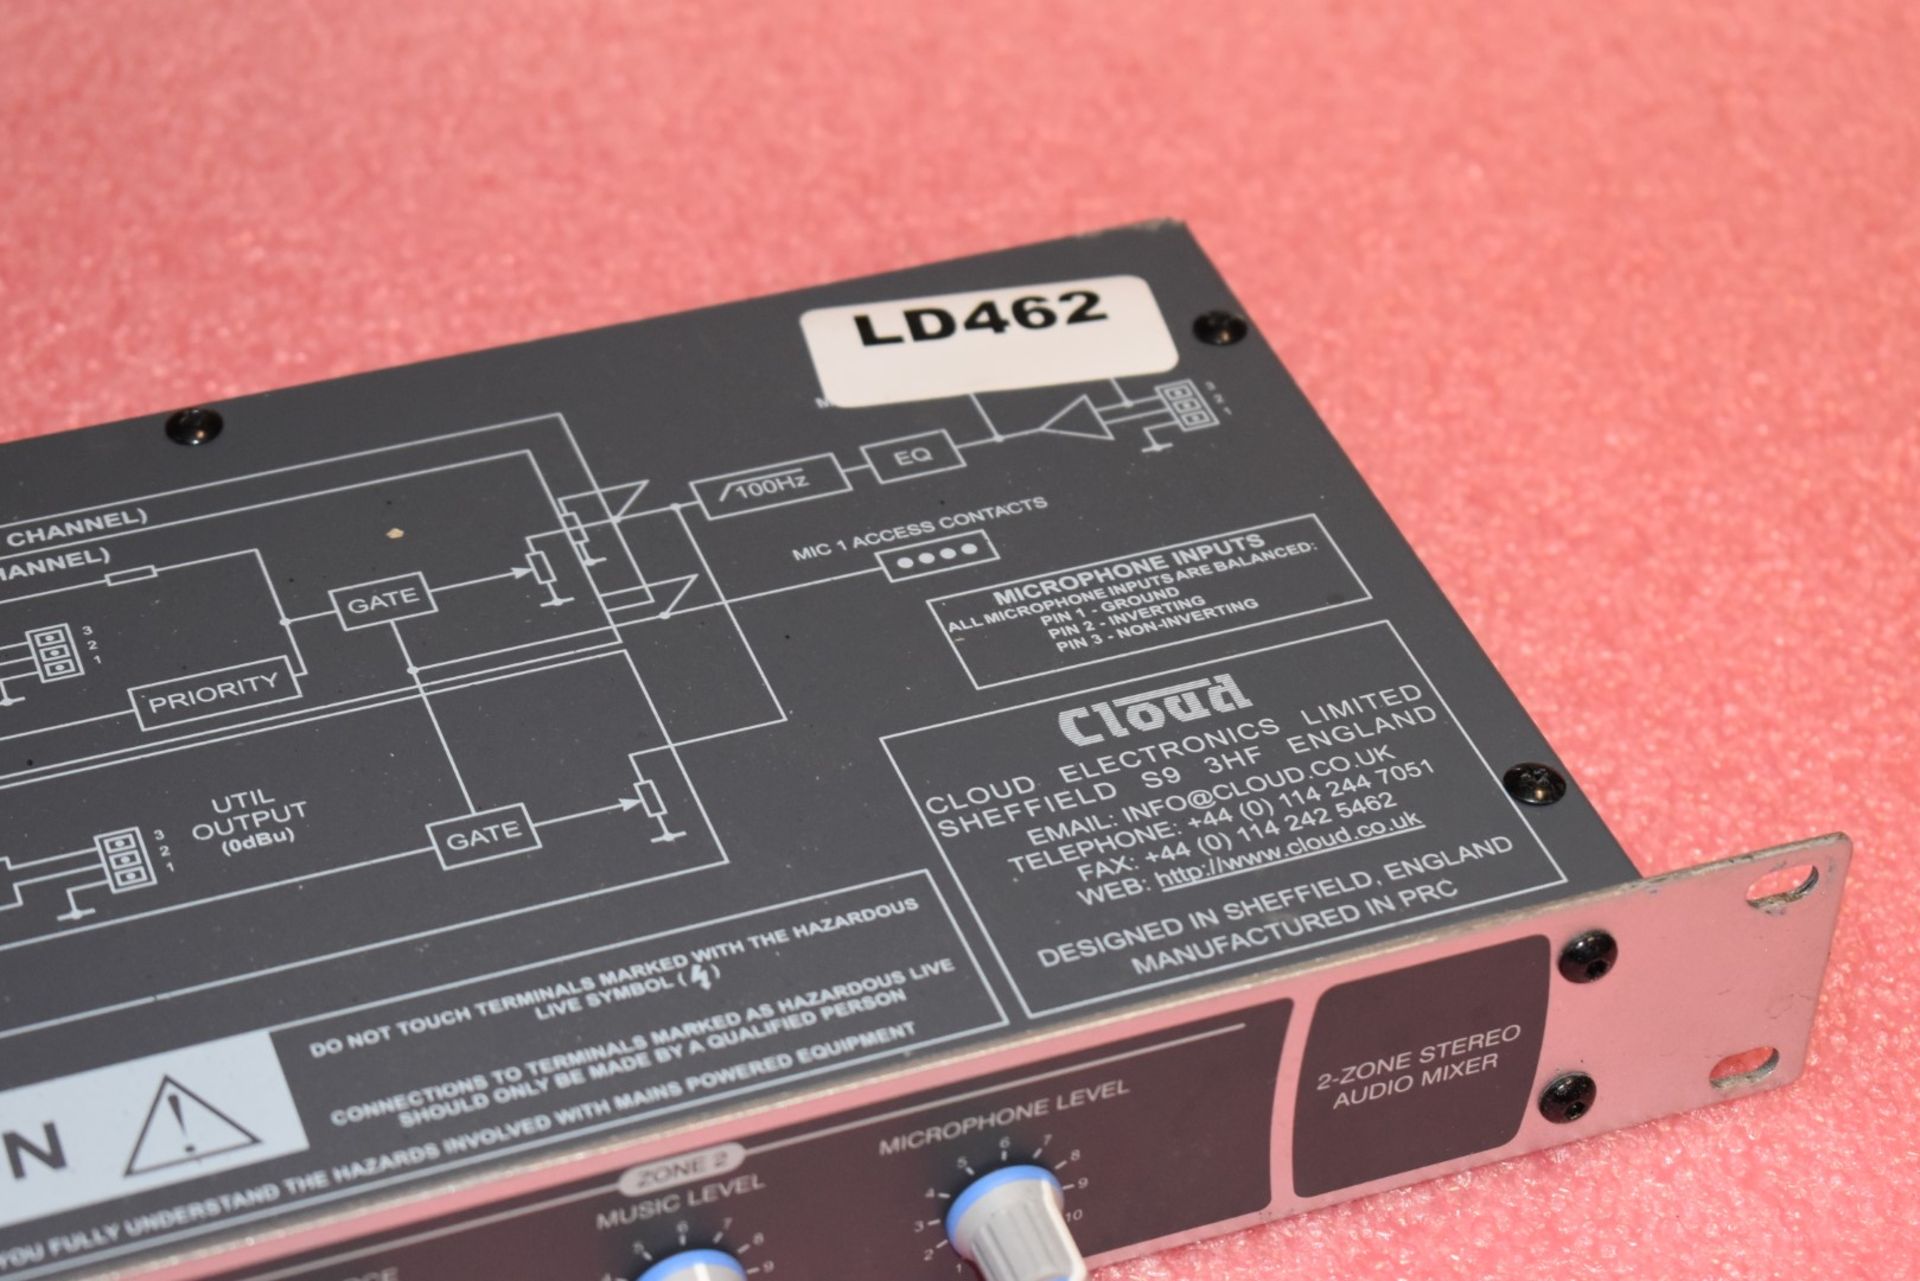 1 x Cloud CX163 Two Zone Audio Mixer - Rackmount UNIT - CL409 - Ref LD462 - Location: Altrincham - Image 2 of 5